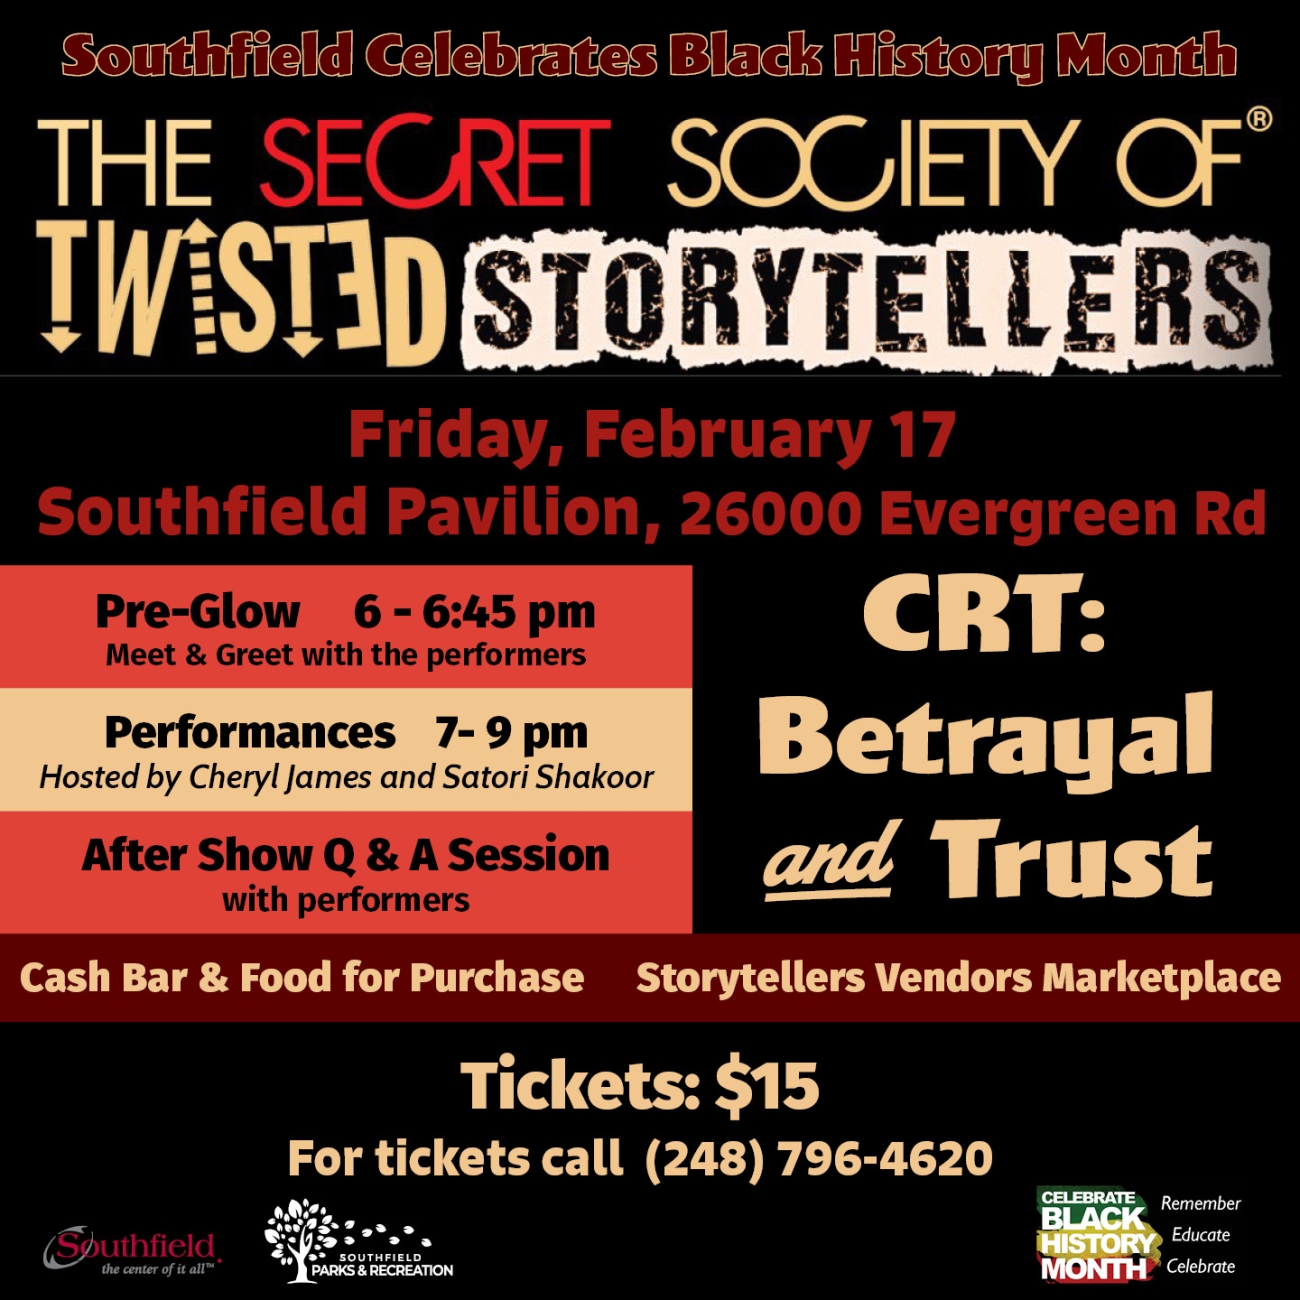 Black History Month 23 Secret Society of Twisted Storytellers